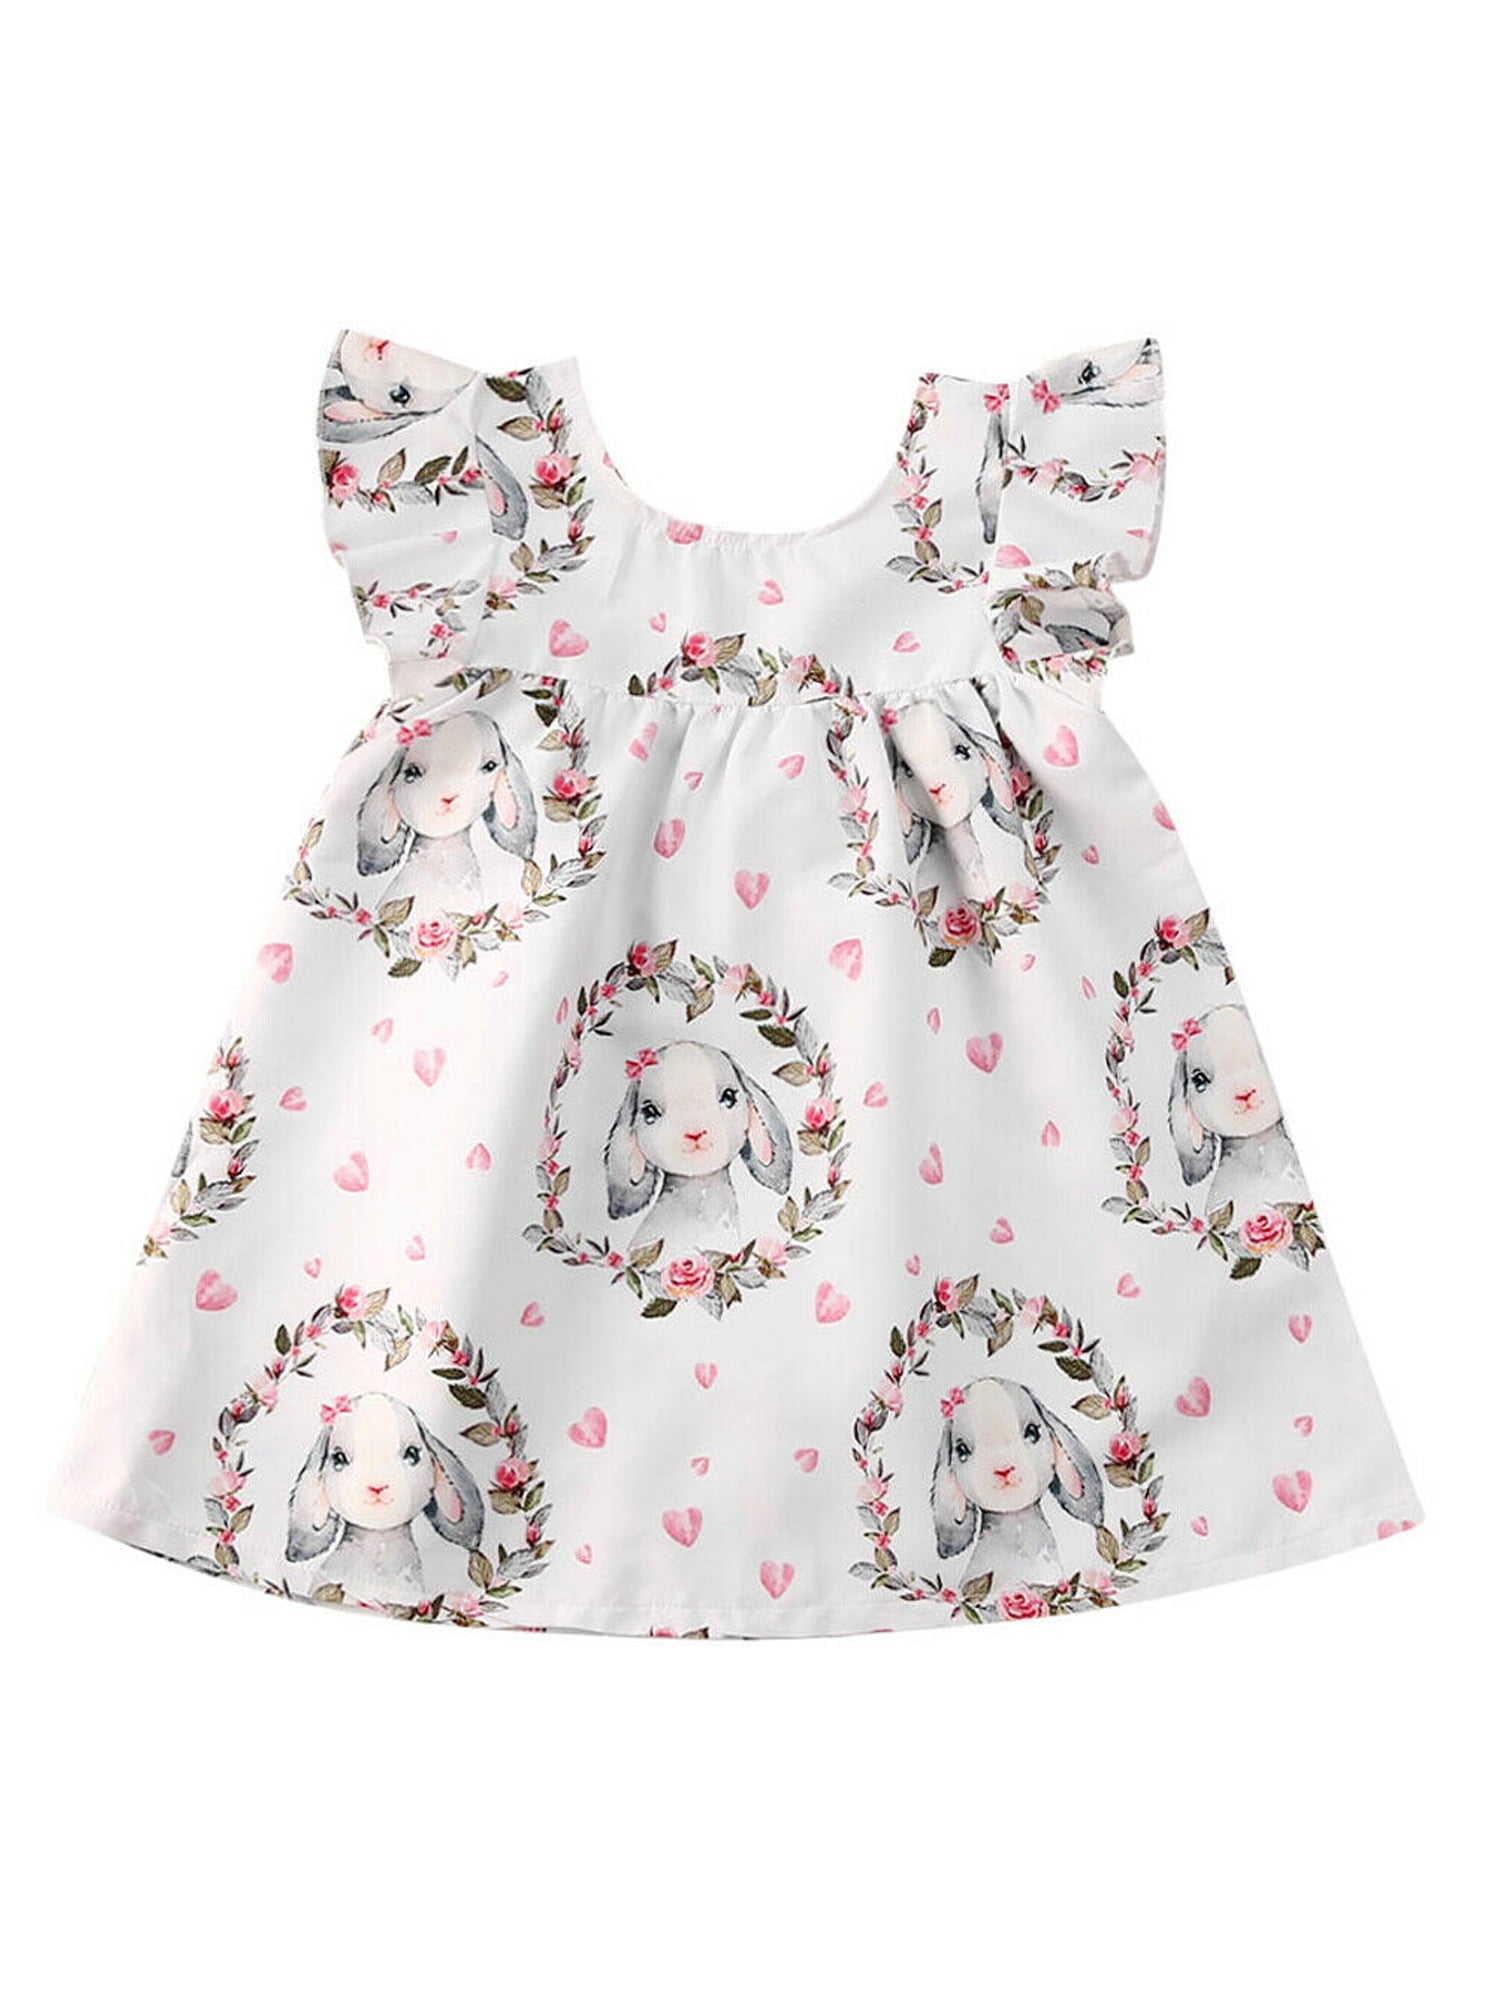 cute easter dresses for infants